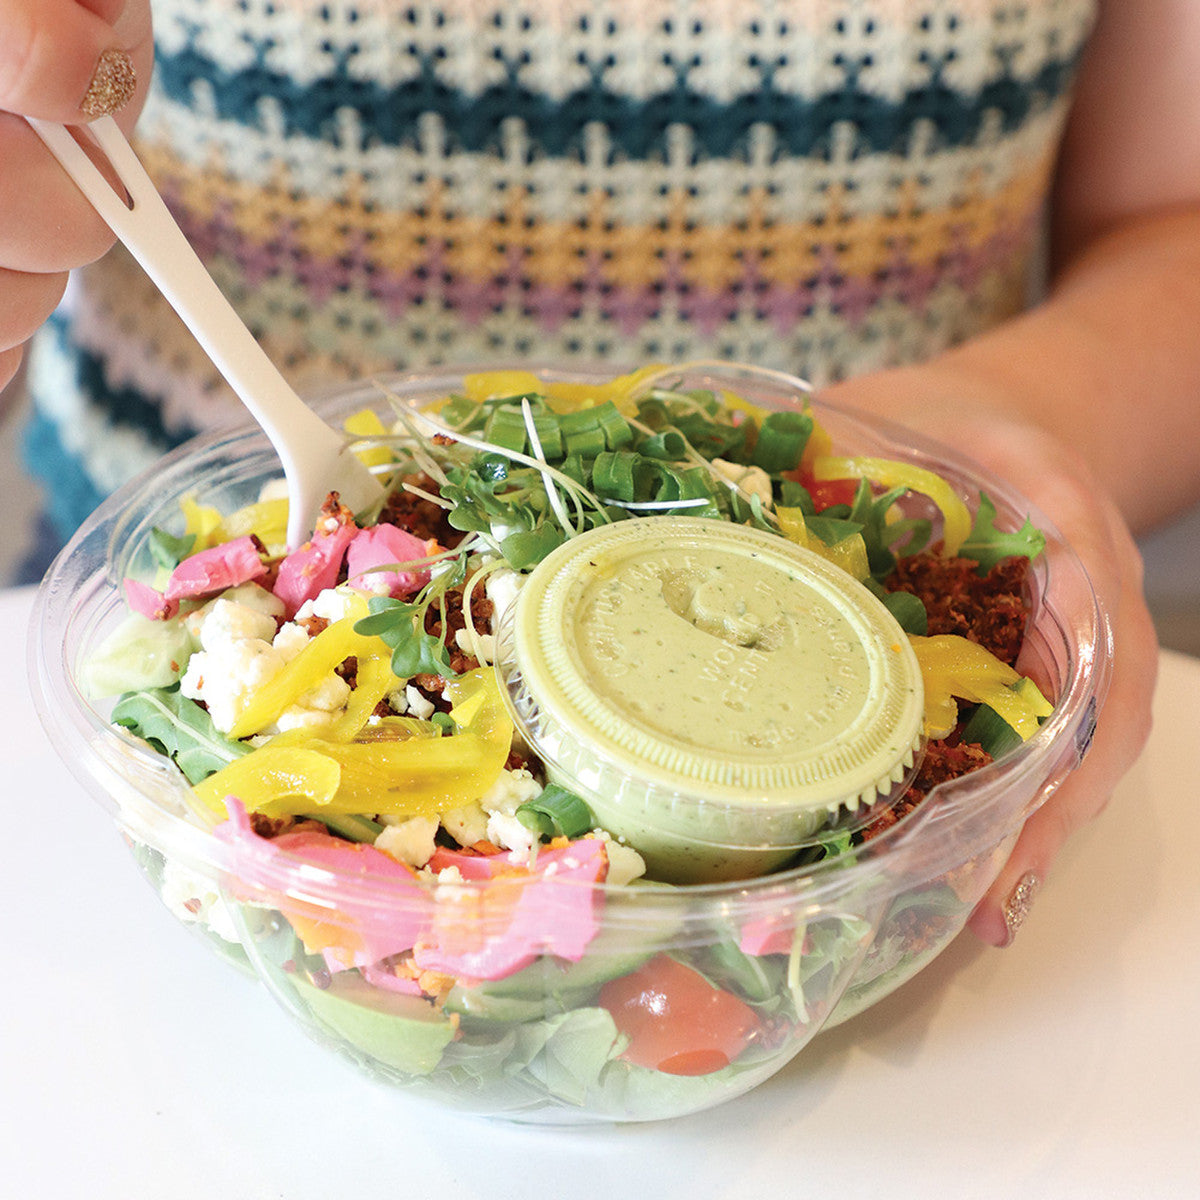 World Centric 32 oz Compostable PLA Salad Bowl